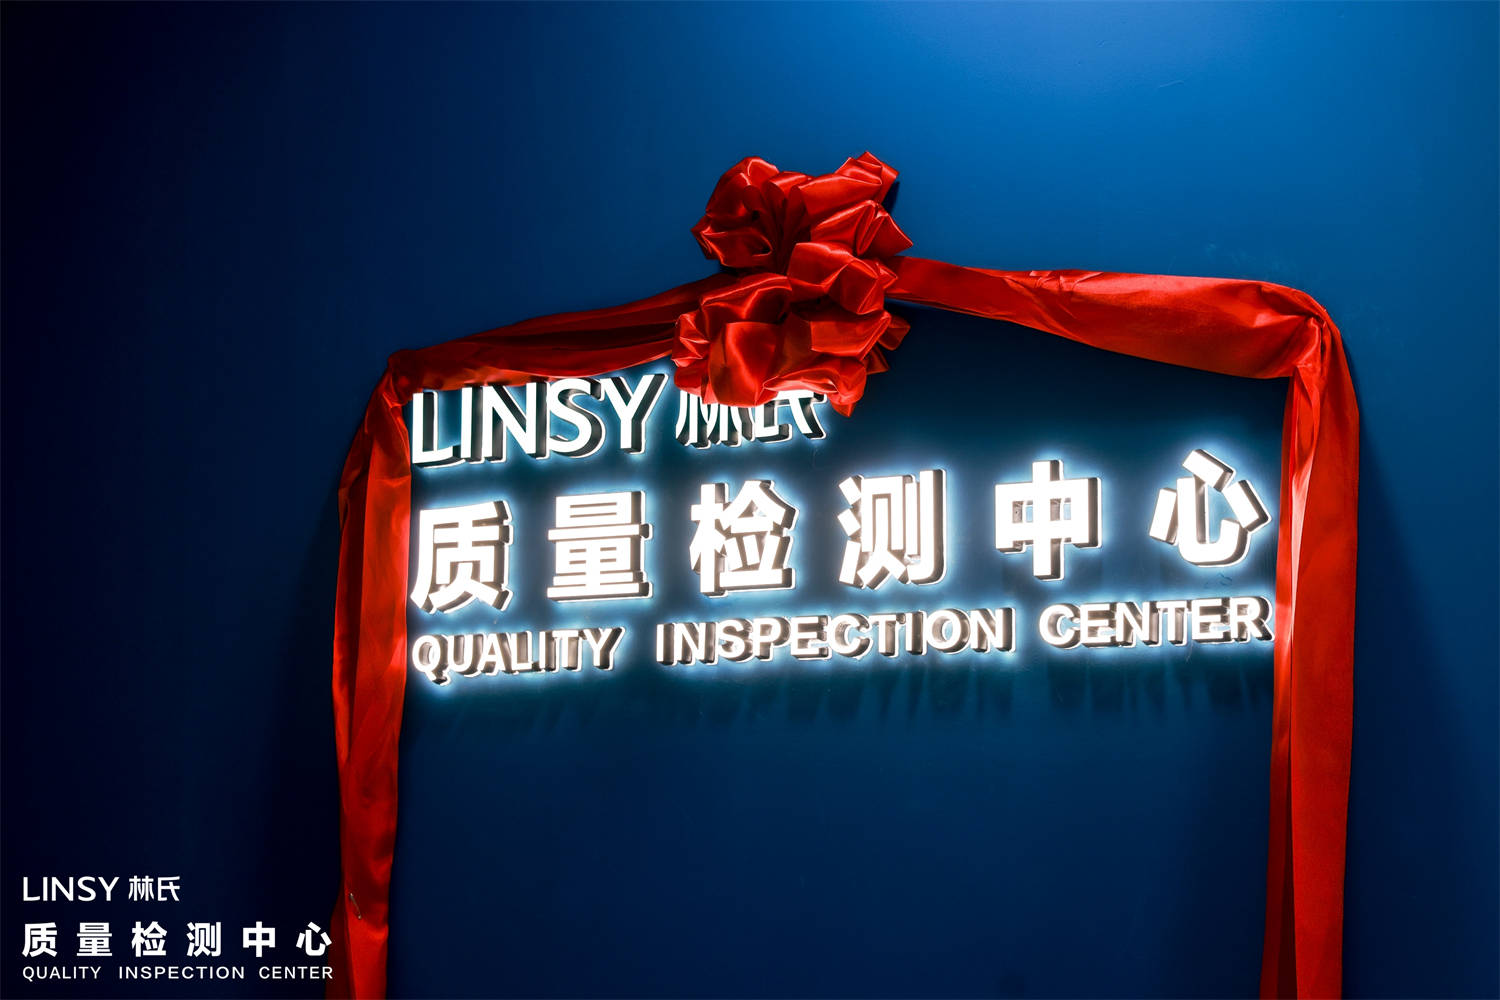 Selamat atas Pembukaan Pusat Inspeksi Mutu LINSY
        